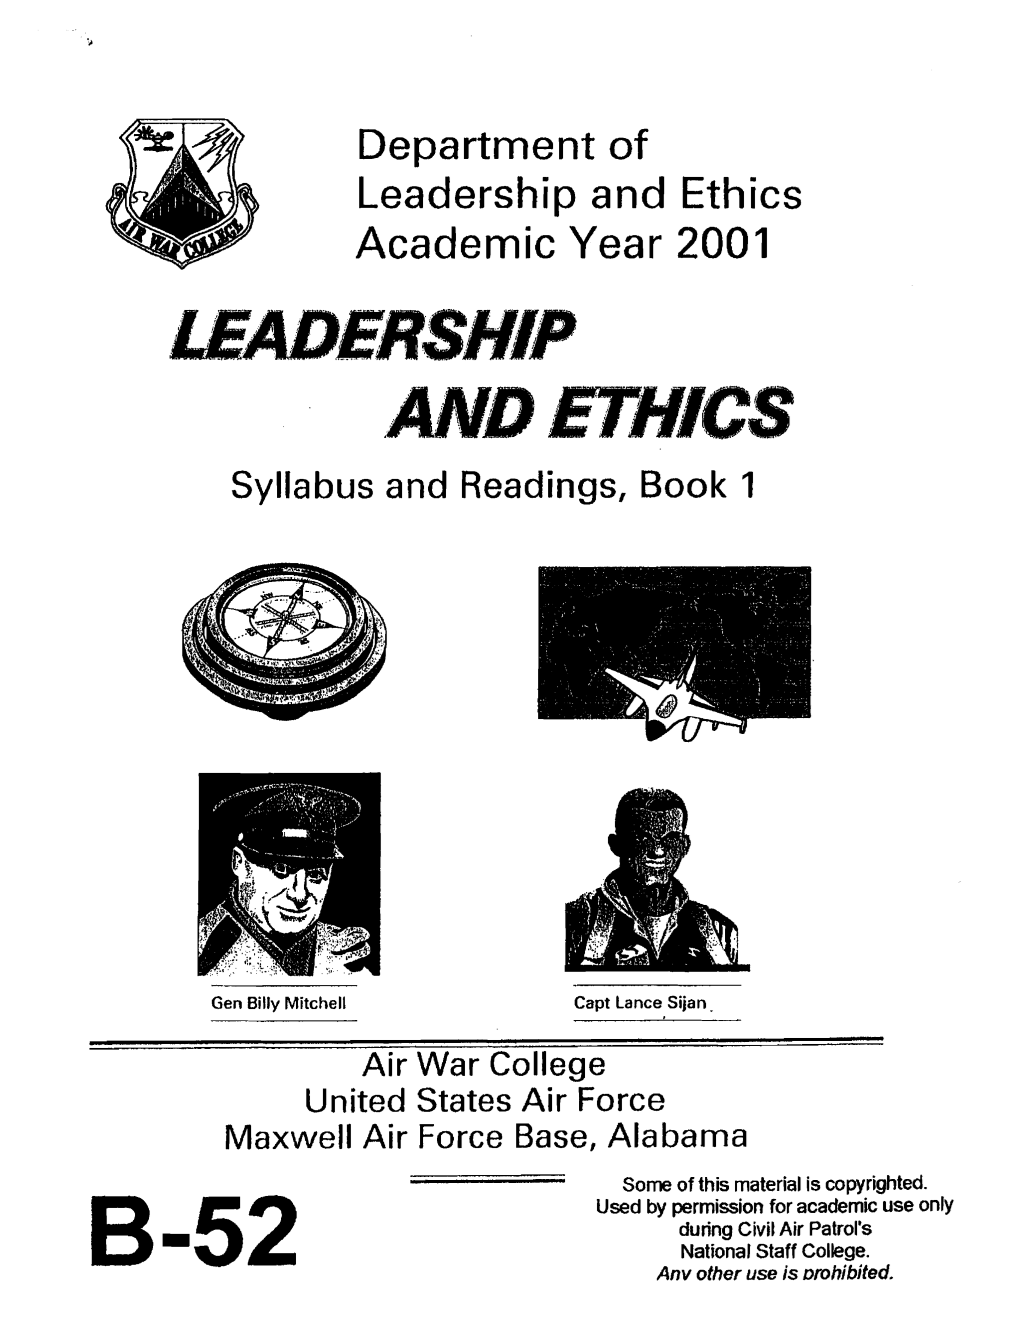 Leadership and Ethics Academic Year 2001